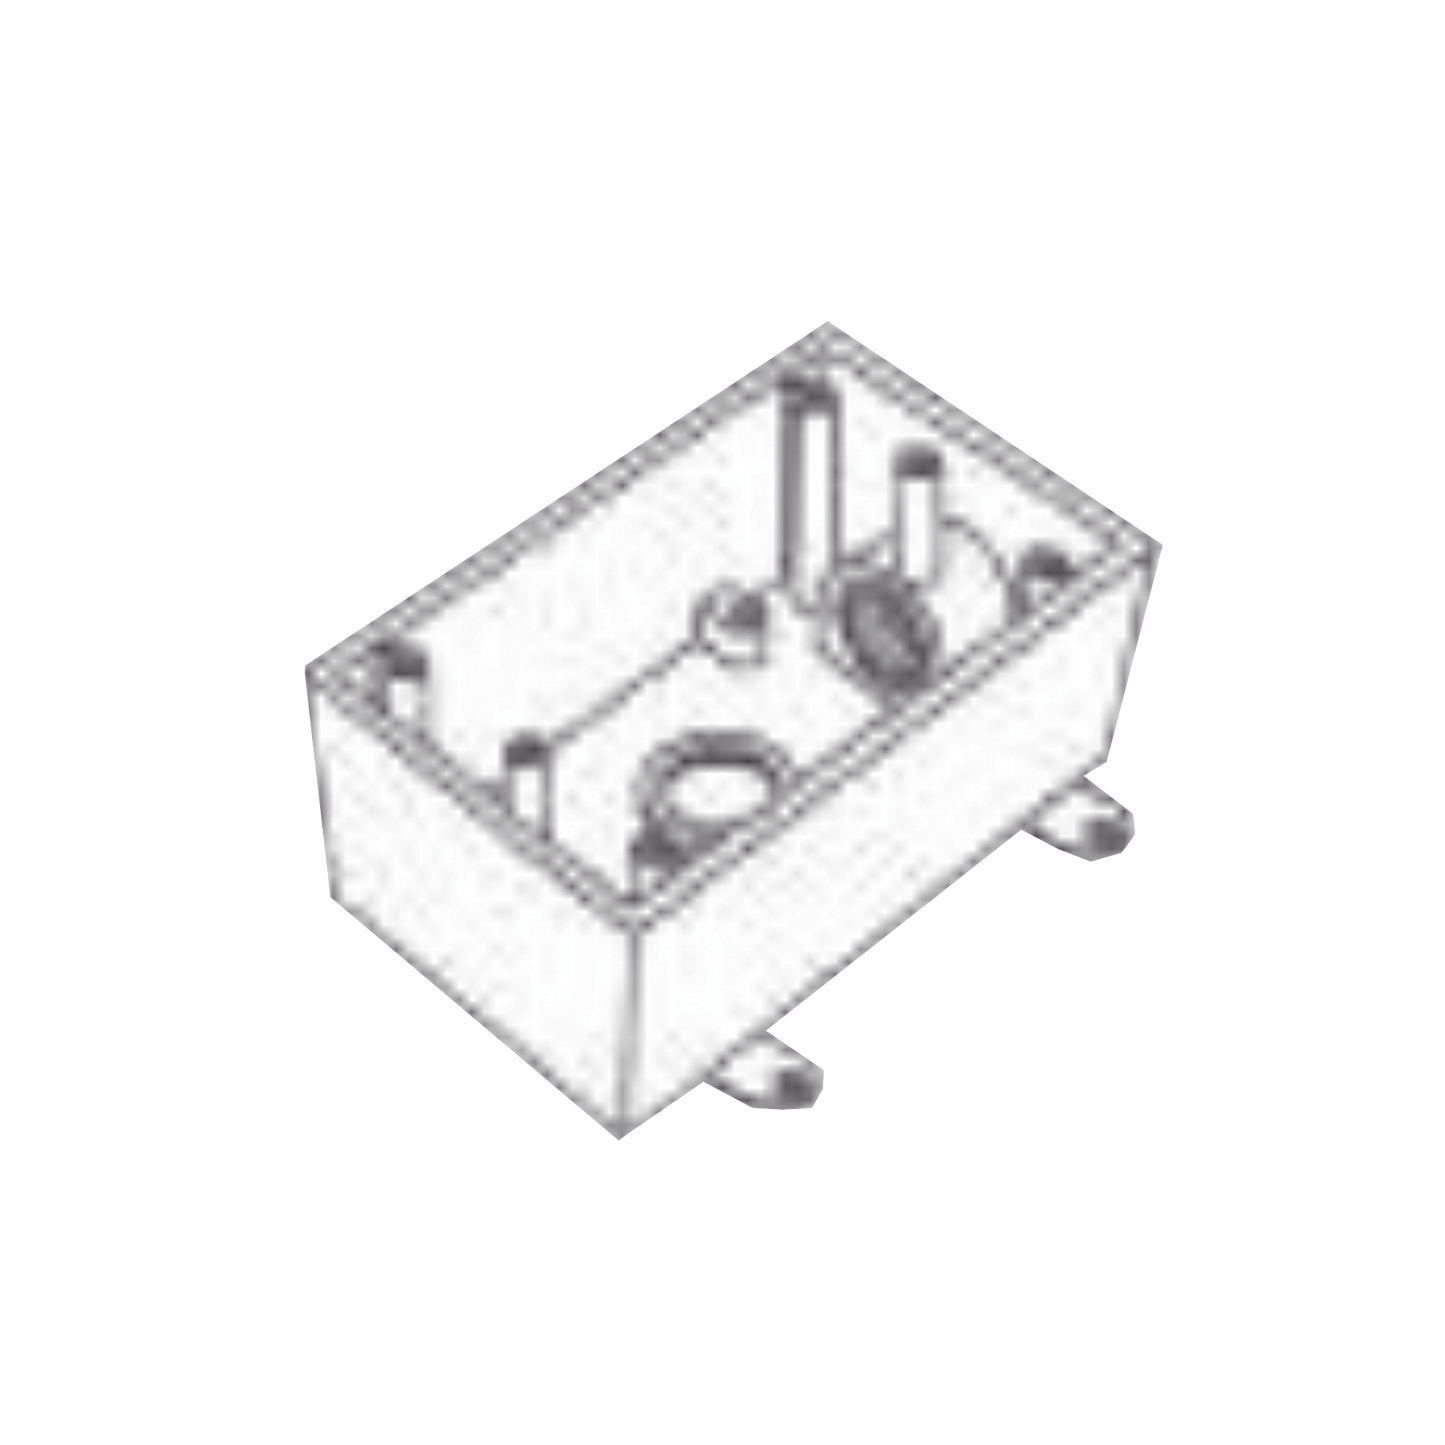 Caja Condulet FS de 3/4" (19.05 mm) con dos bocas a prueba de intemperie.